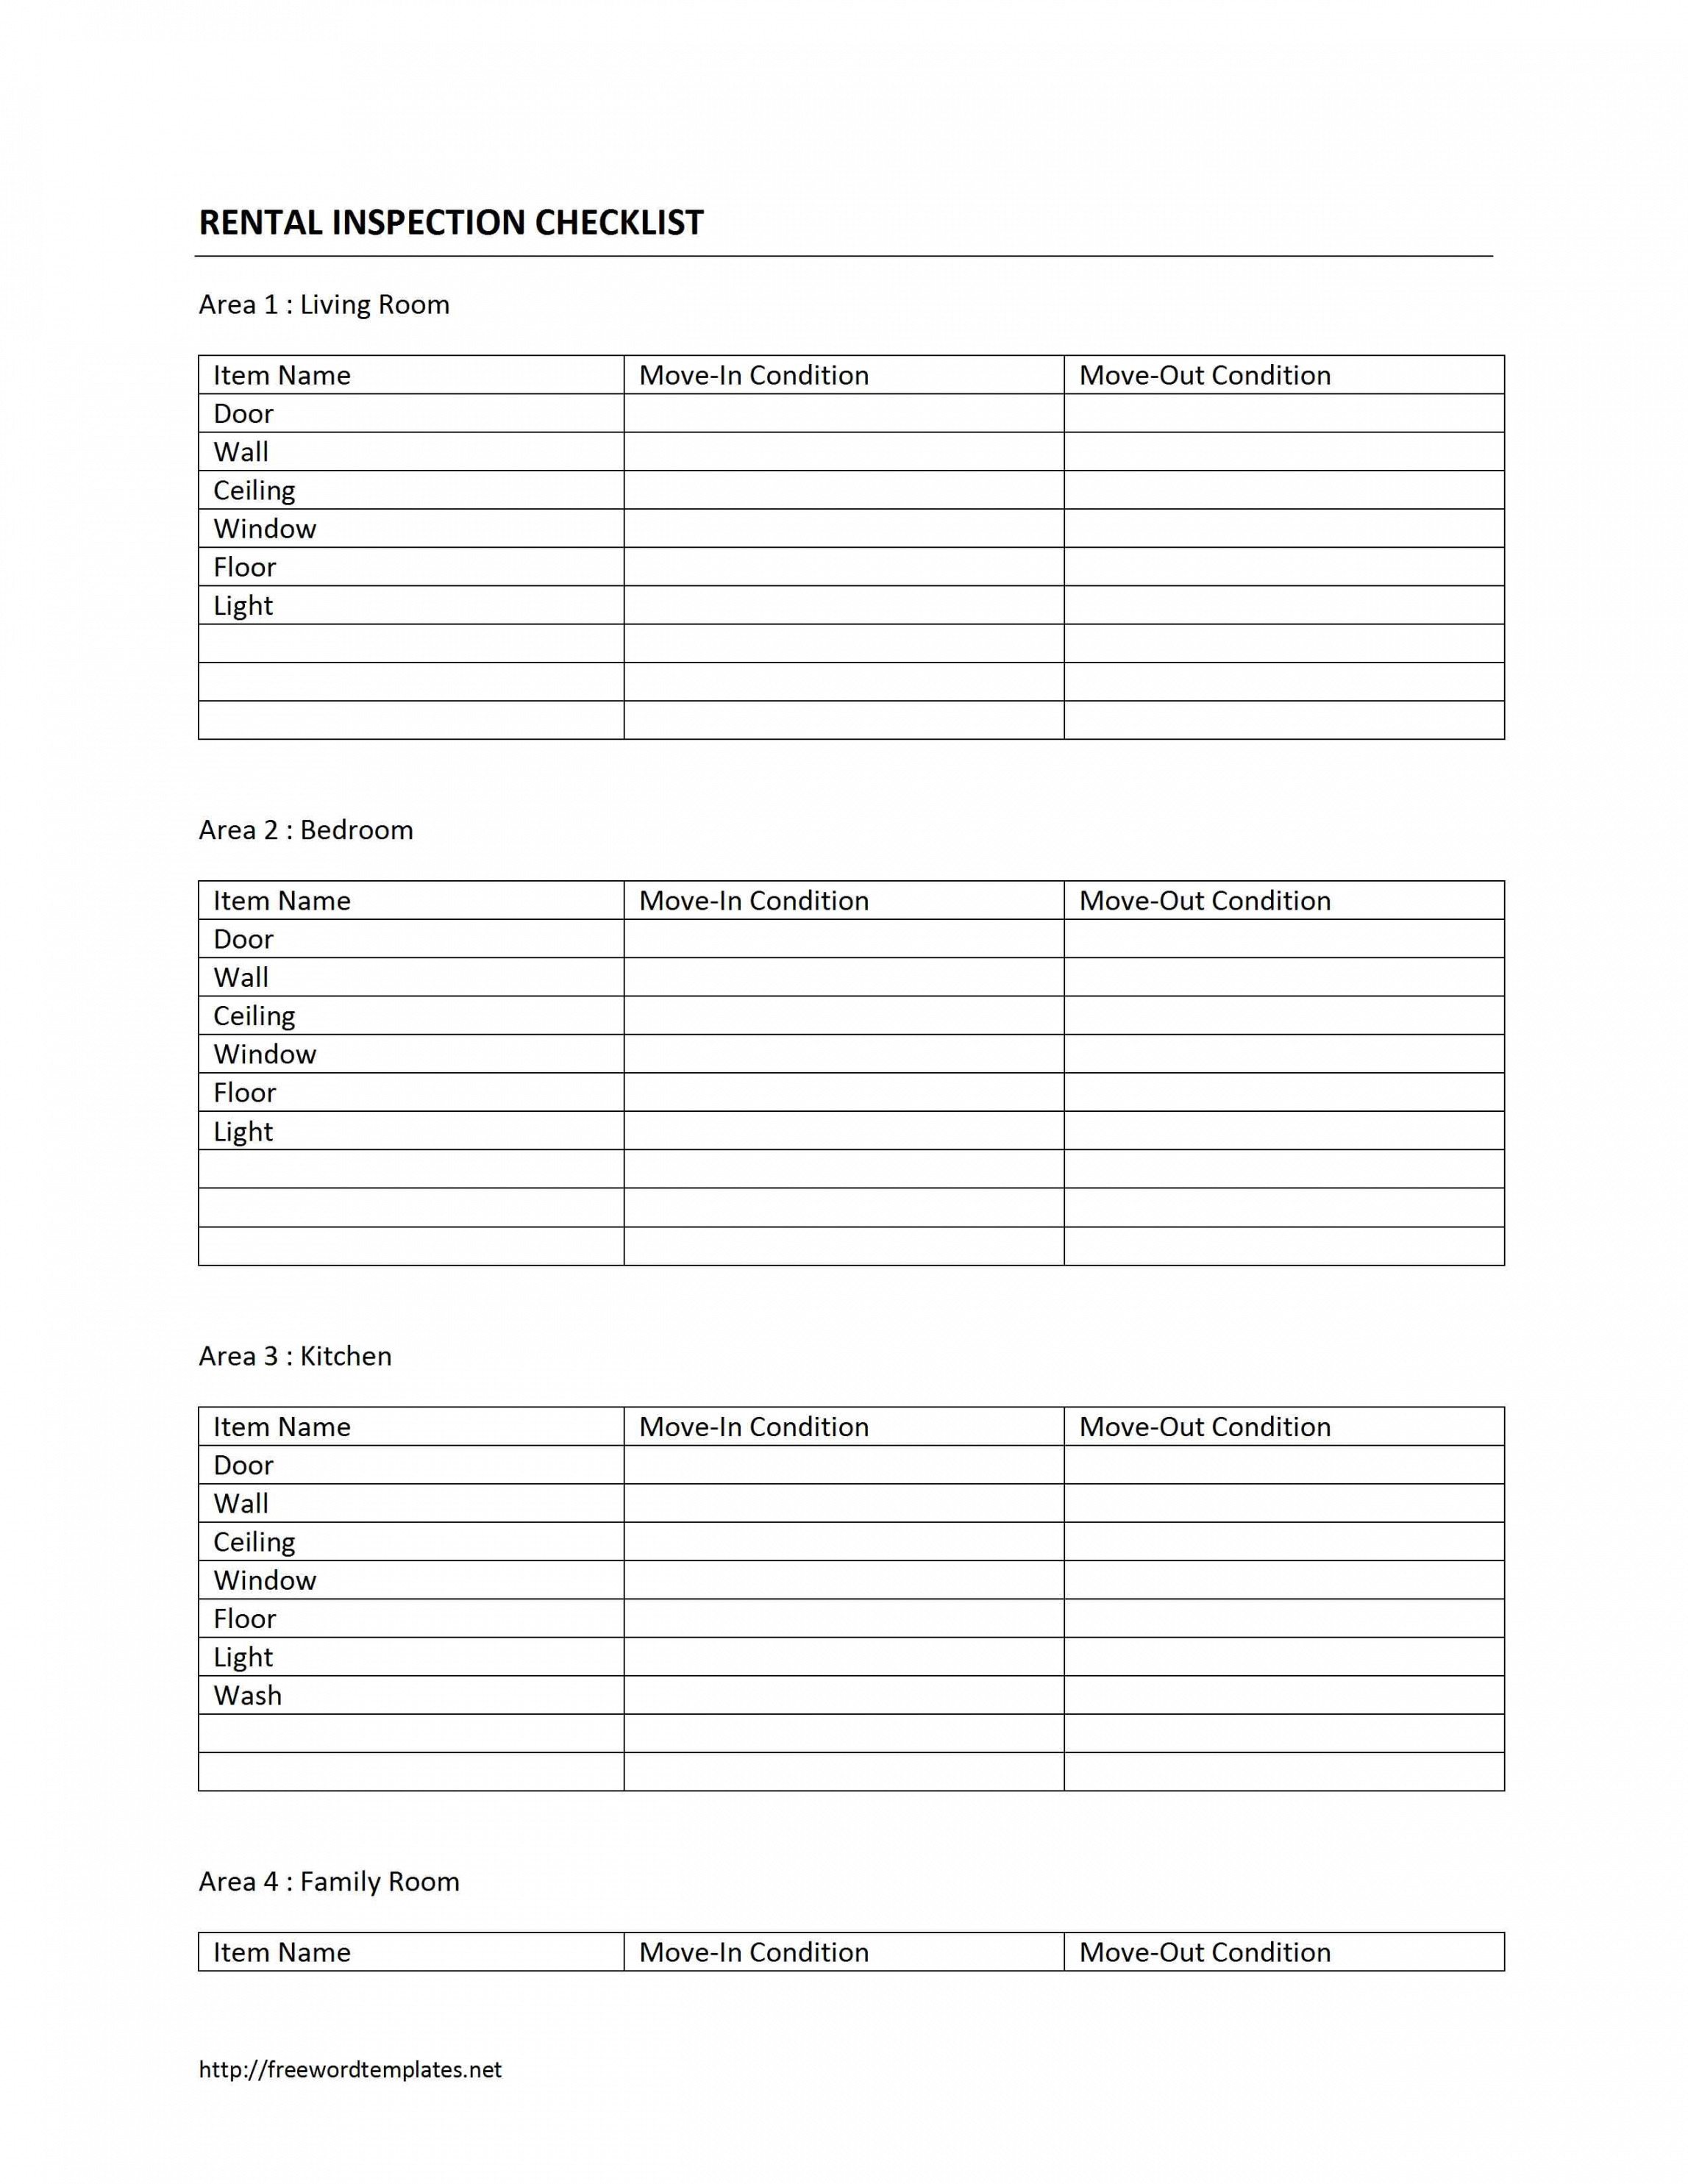 printable-rental-inspection-checklist-template-printable-templates